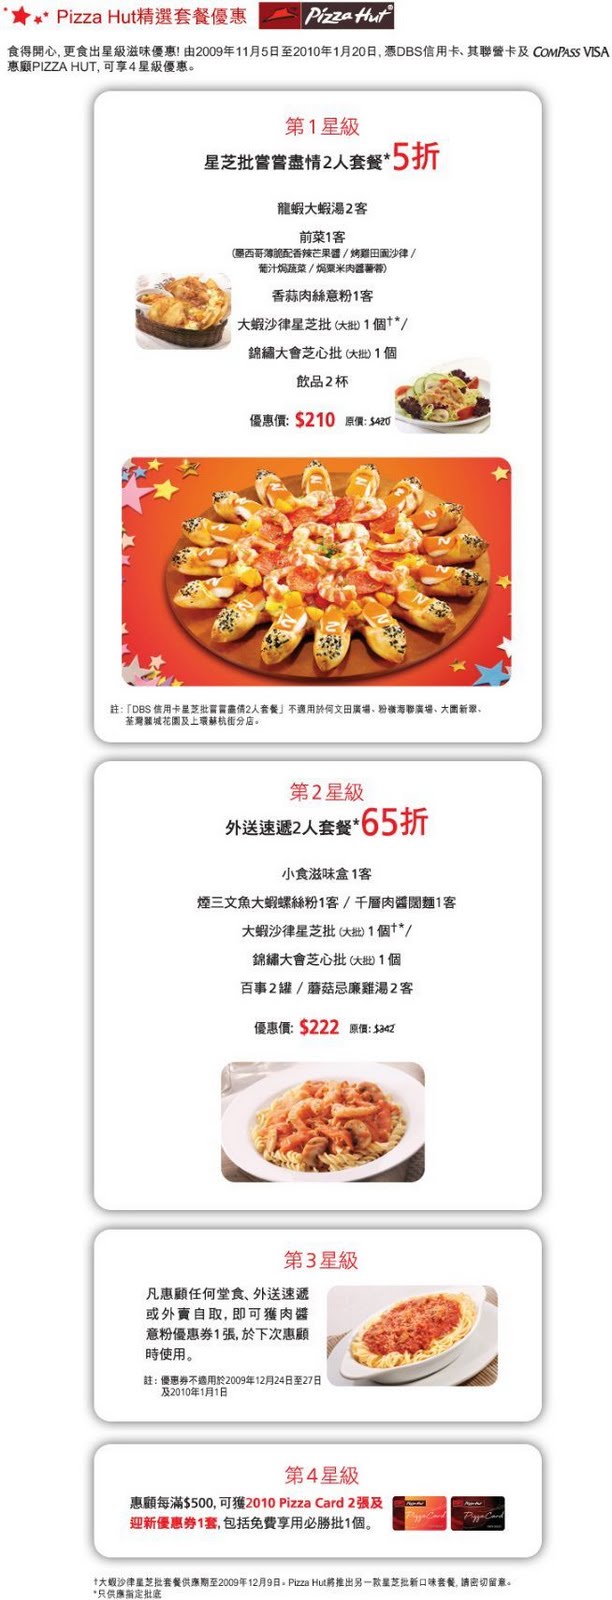 [dbs-credit-card-pizza-hut-dining-offer.jpg]